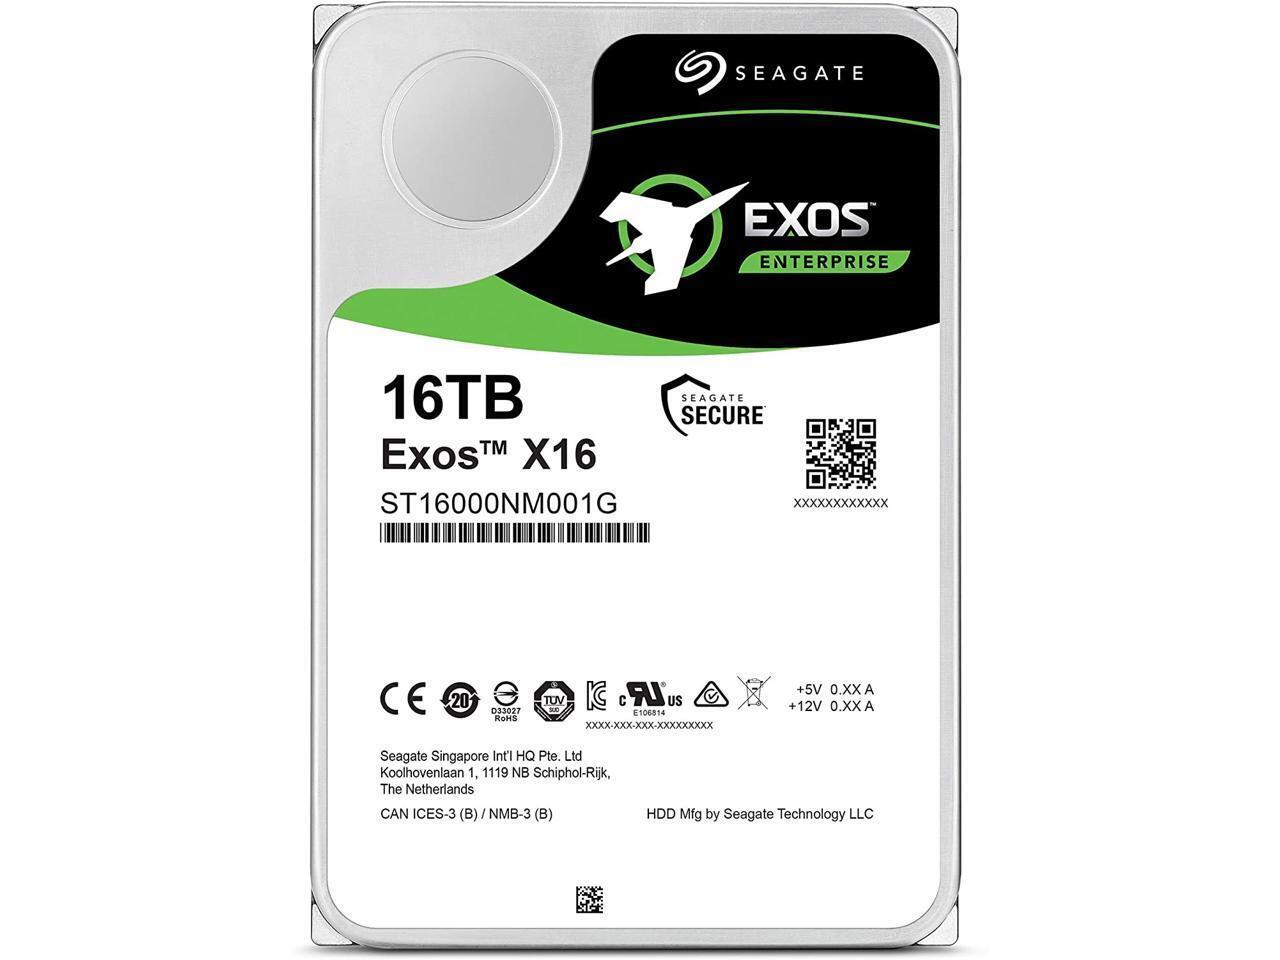 Seagate Exos 16TB Enterprise HDD